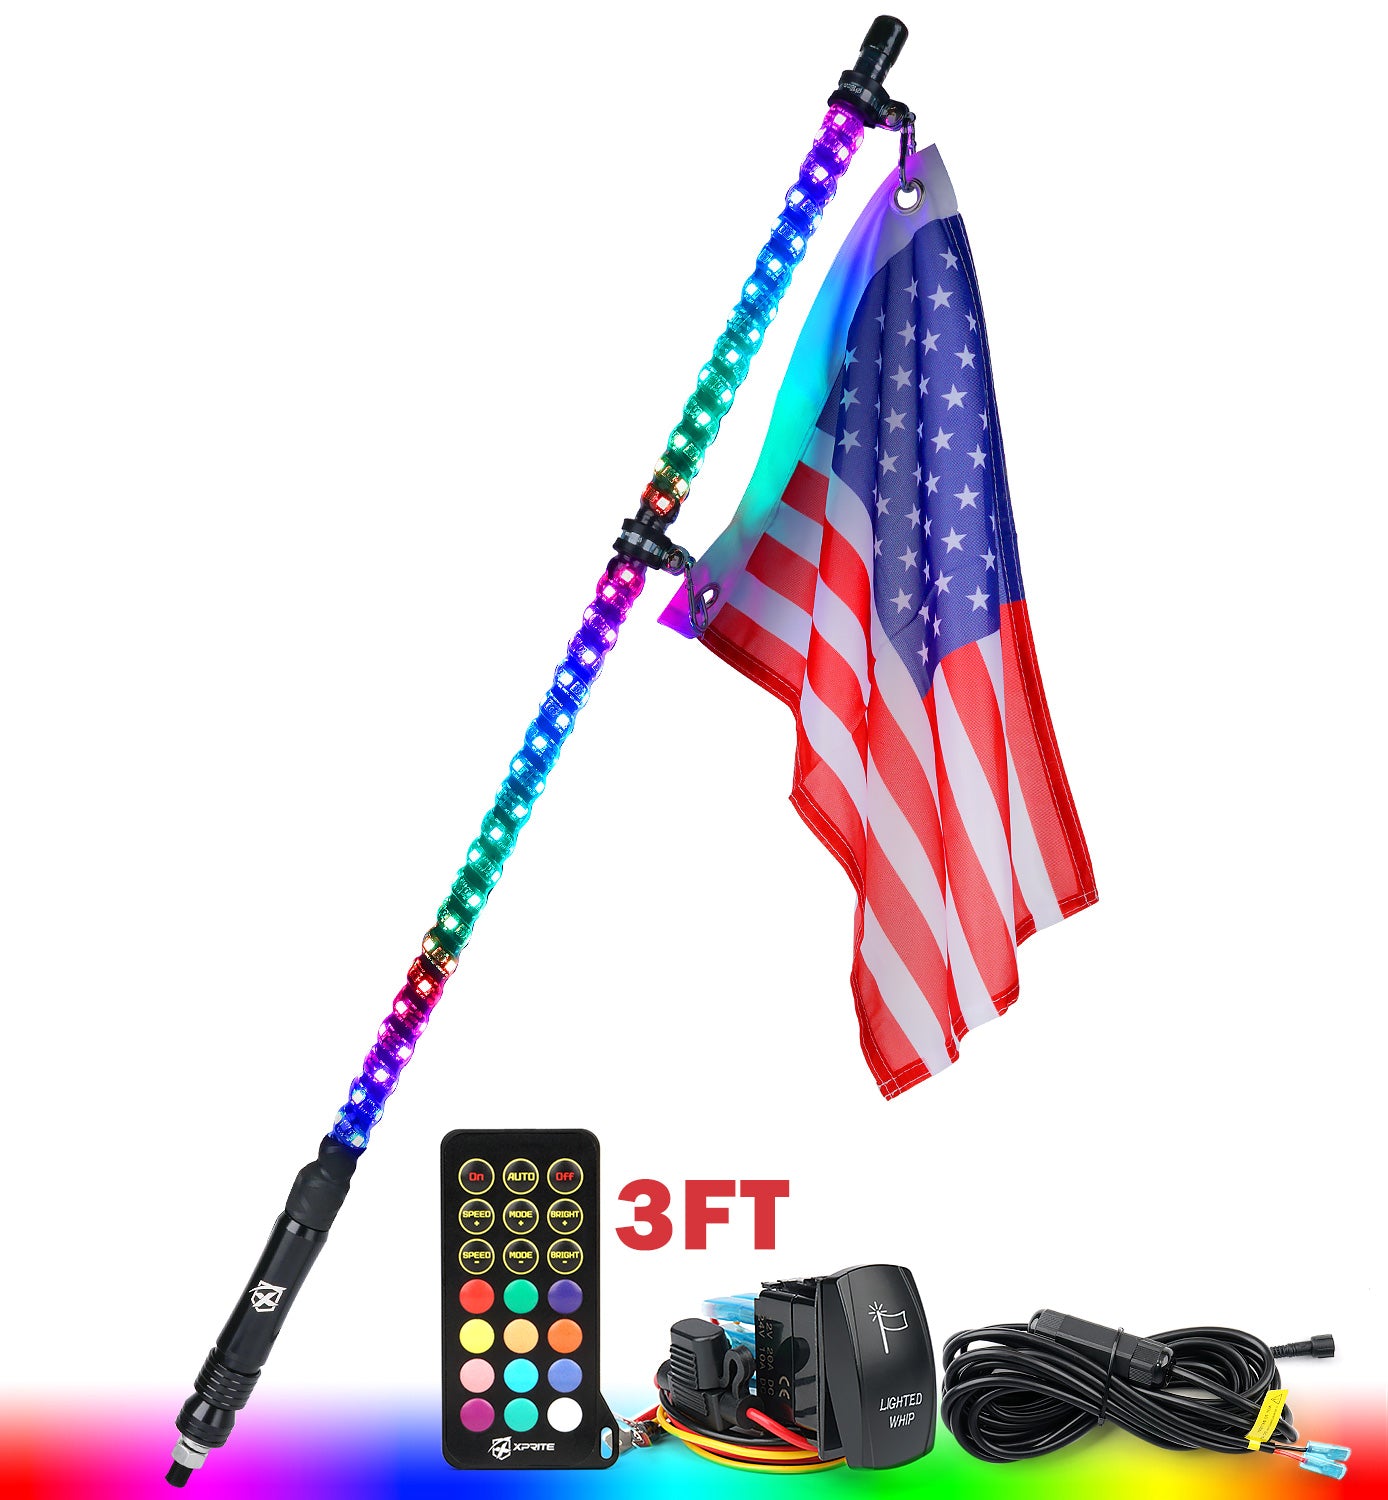 Urimelig smart Banyan Spiral RGB LED Flag Pole Whip Light with Remote Control | Monsoon Seri